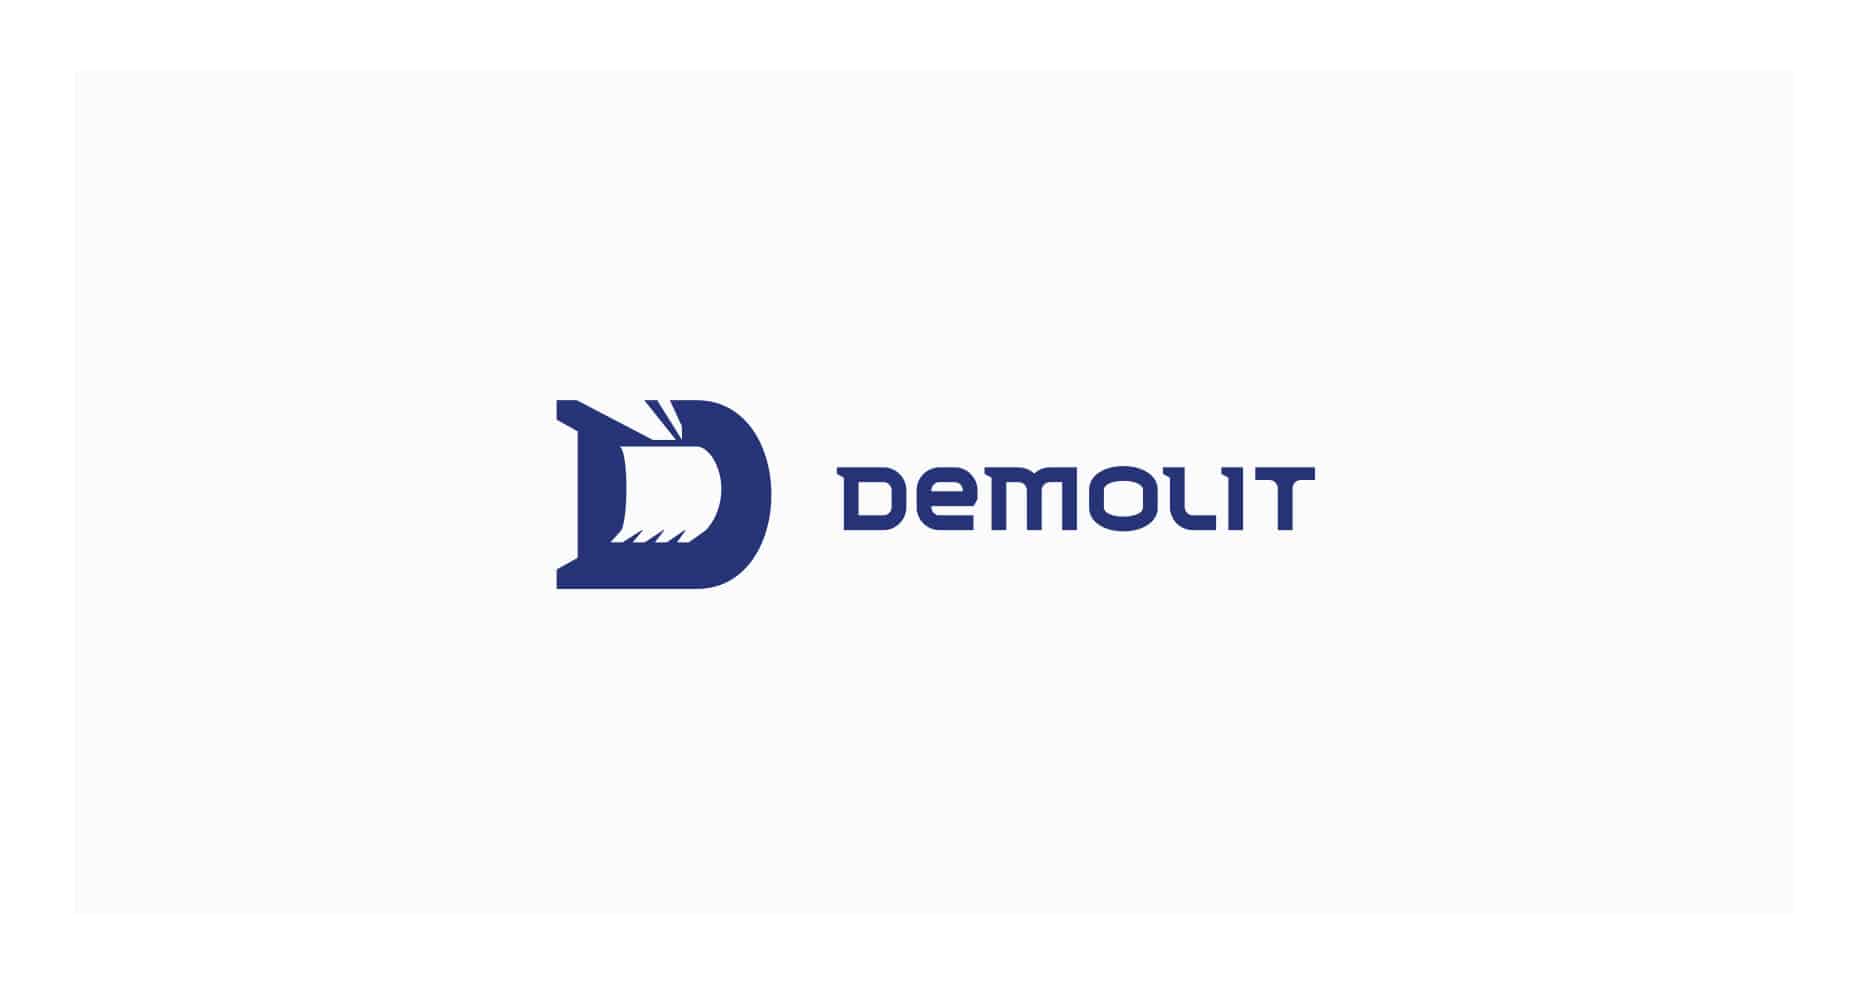 Demolit logo